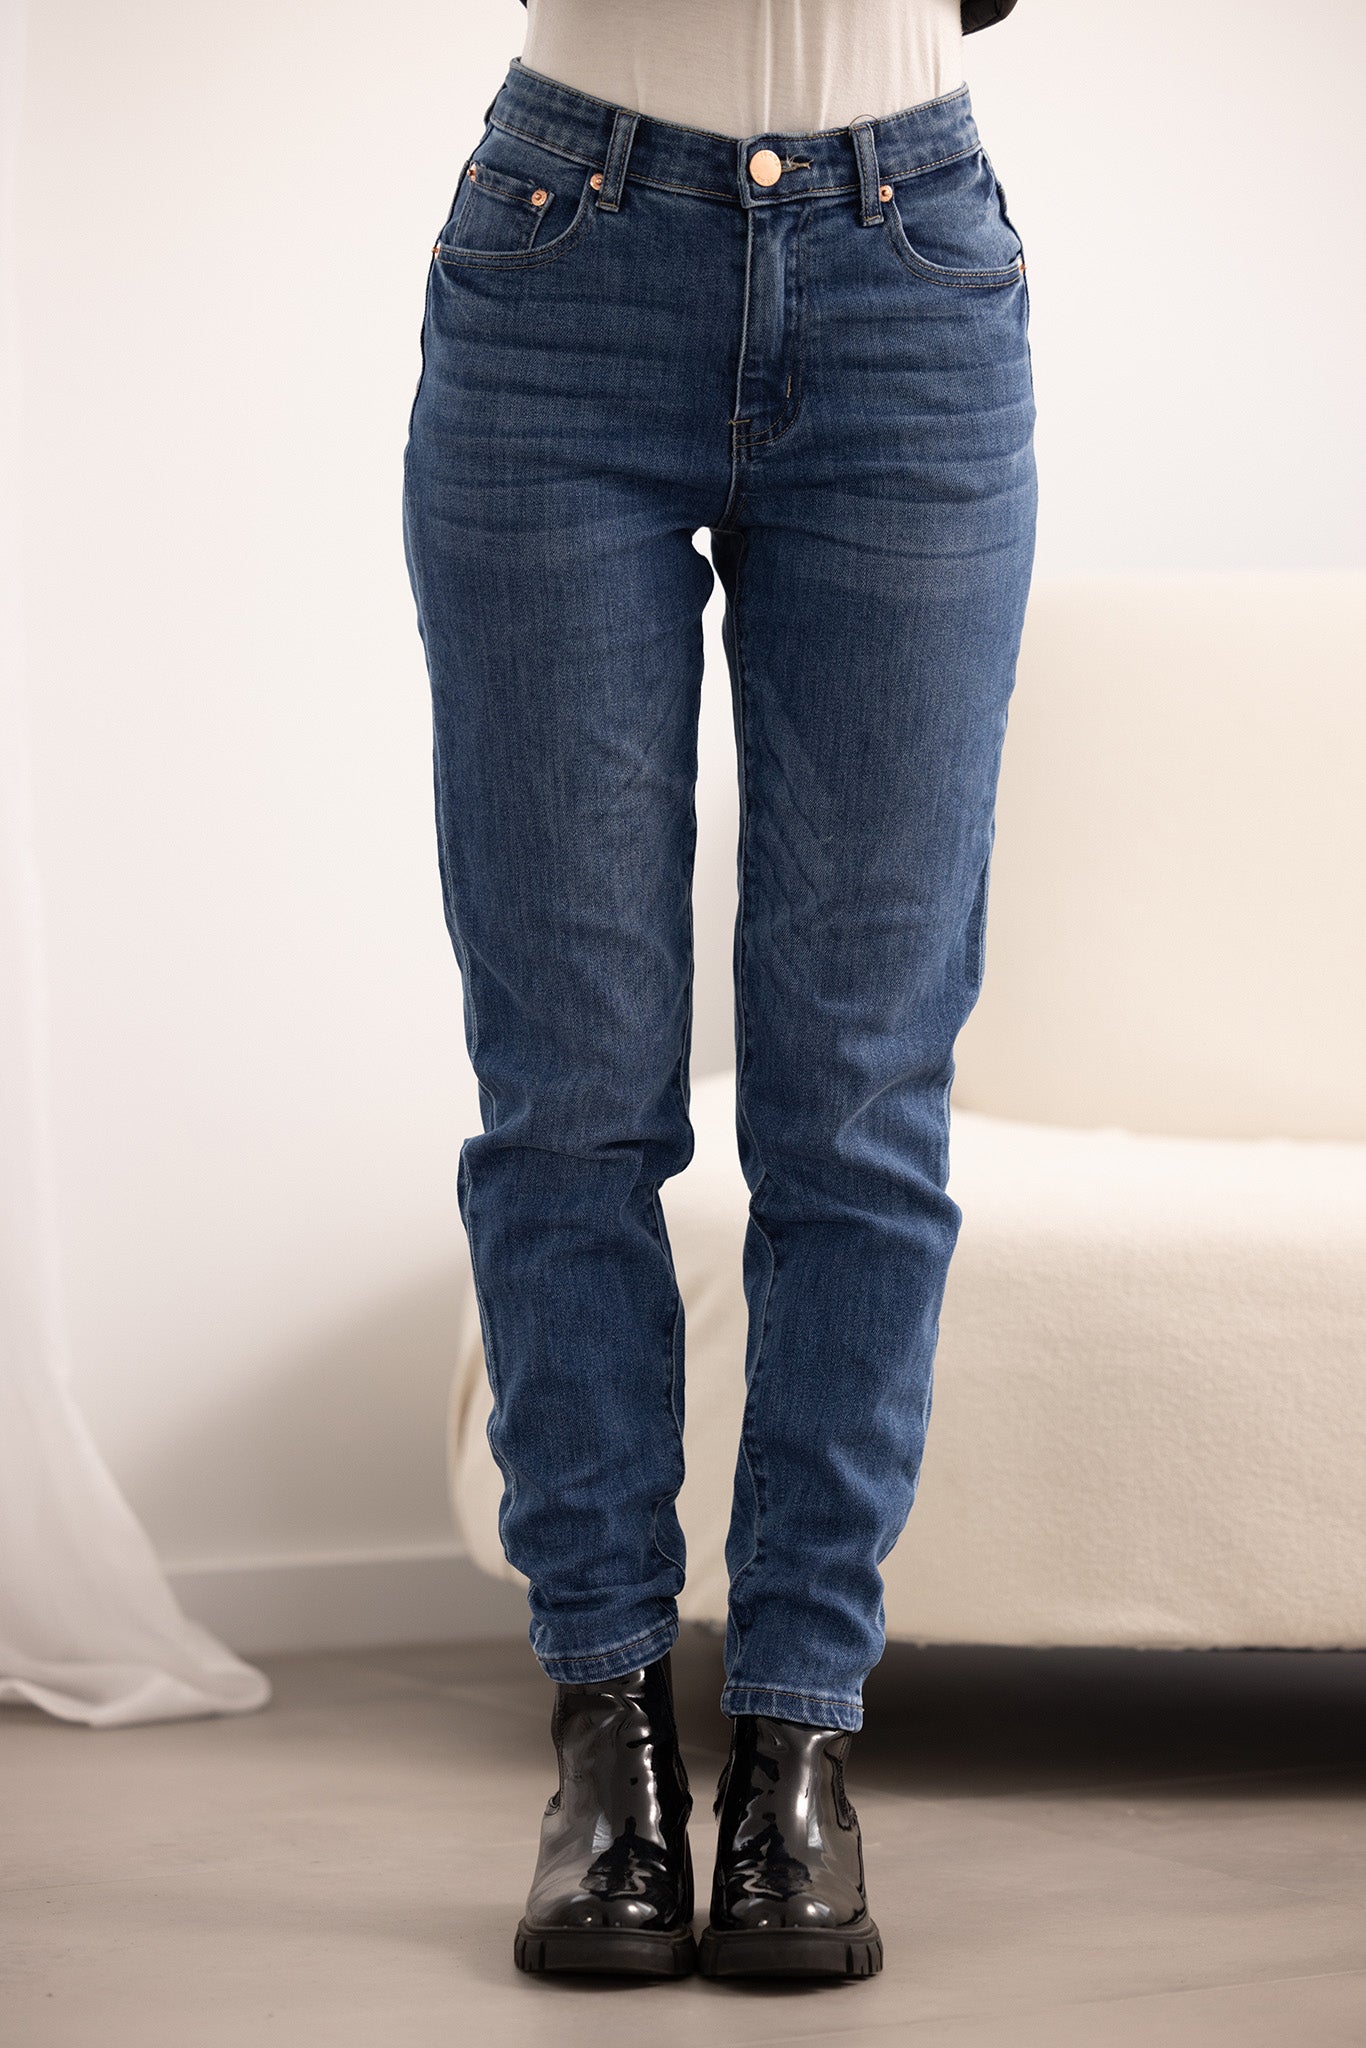 3049-BLU-denim-jeans-pants